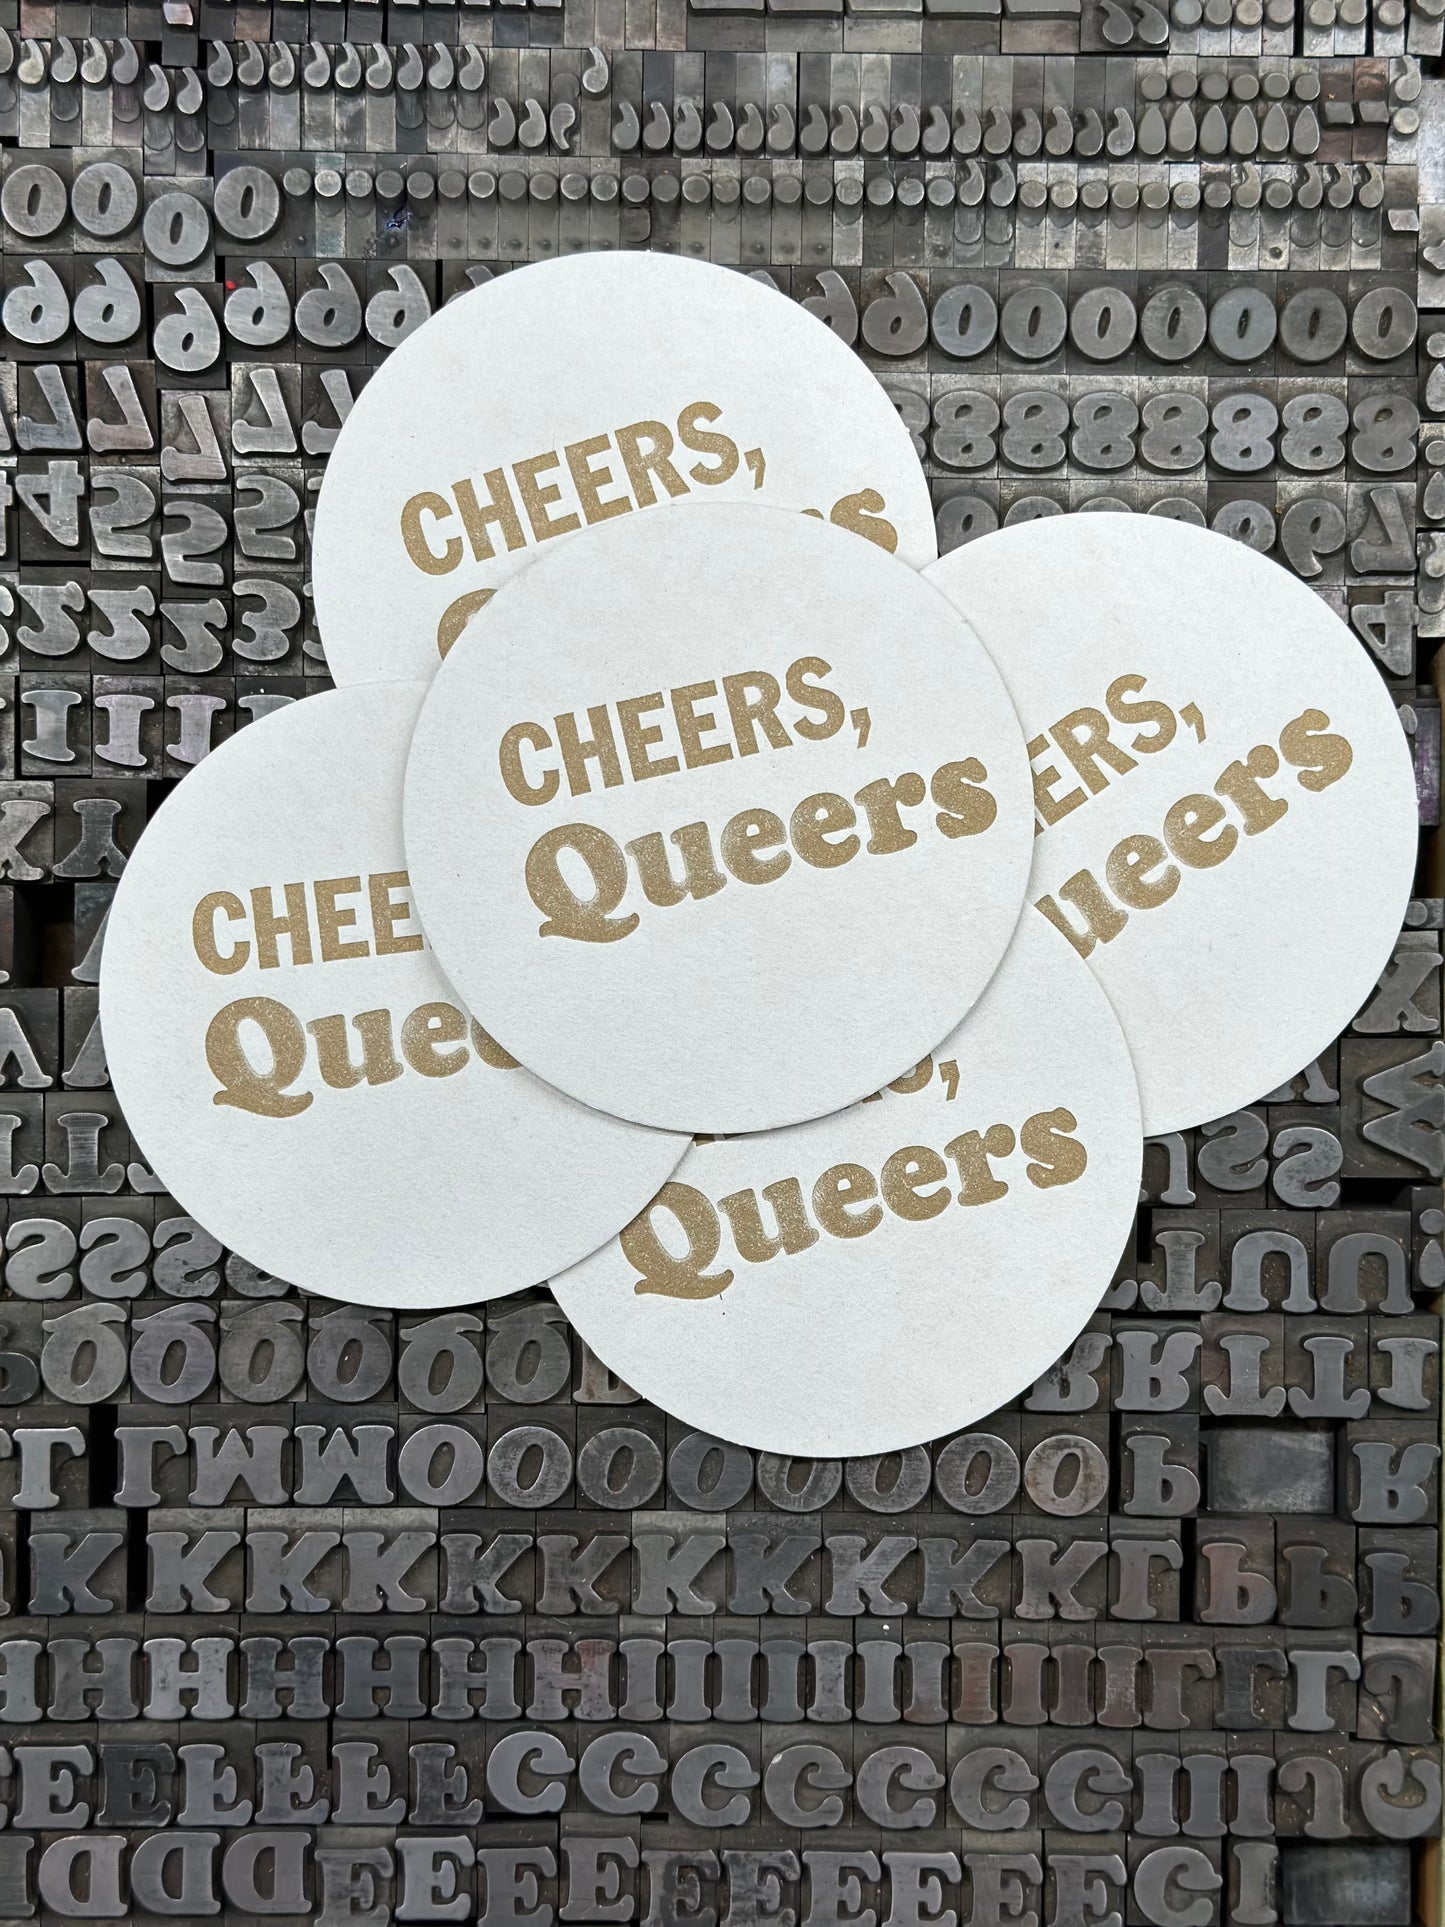 Cheers Queers letterpress coaster set